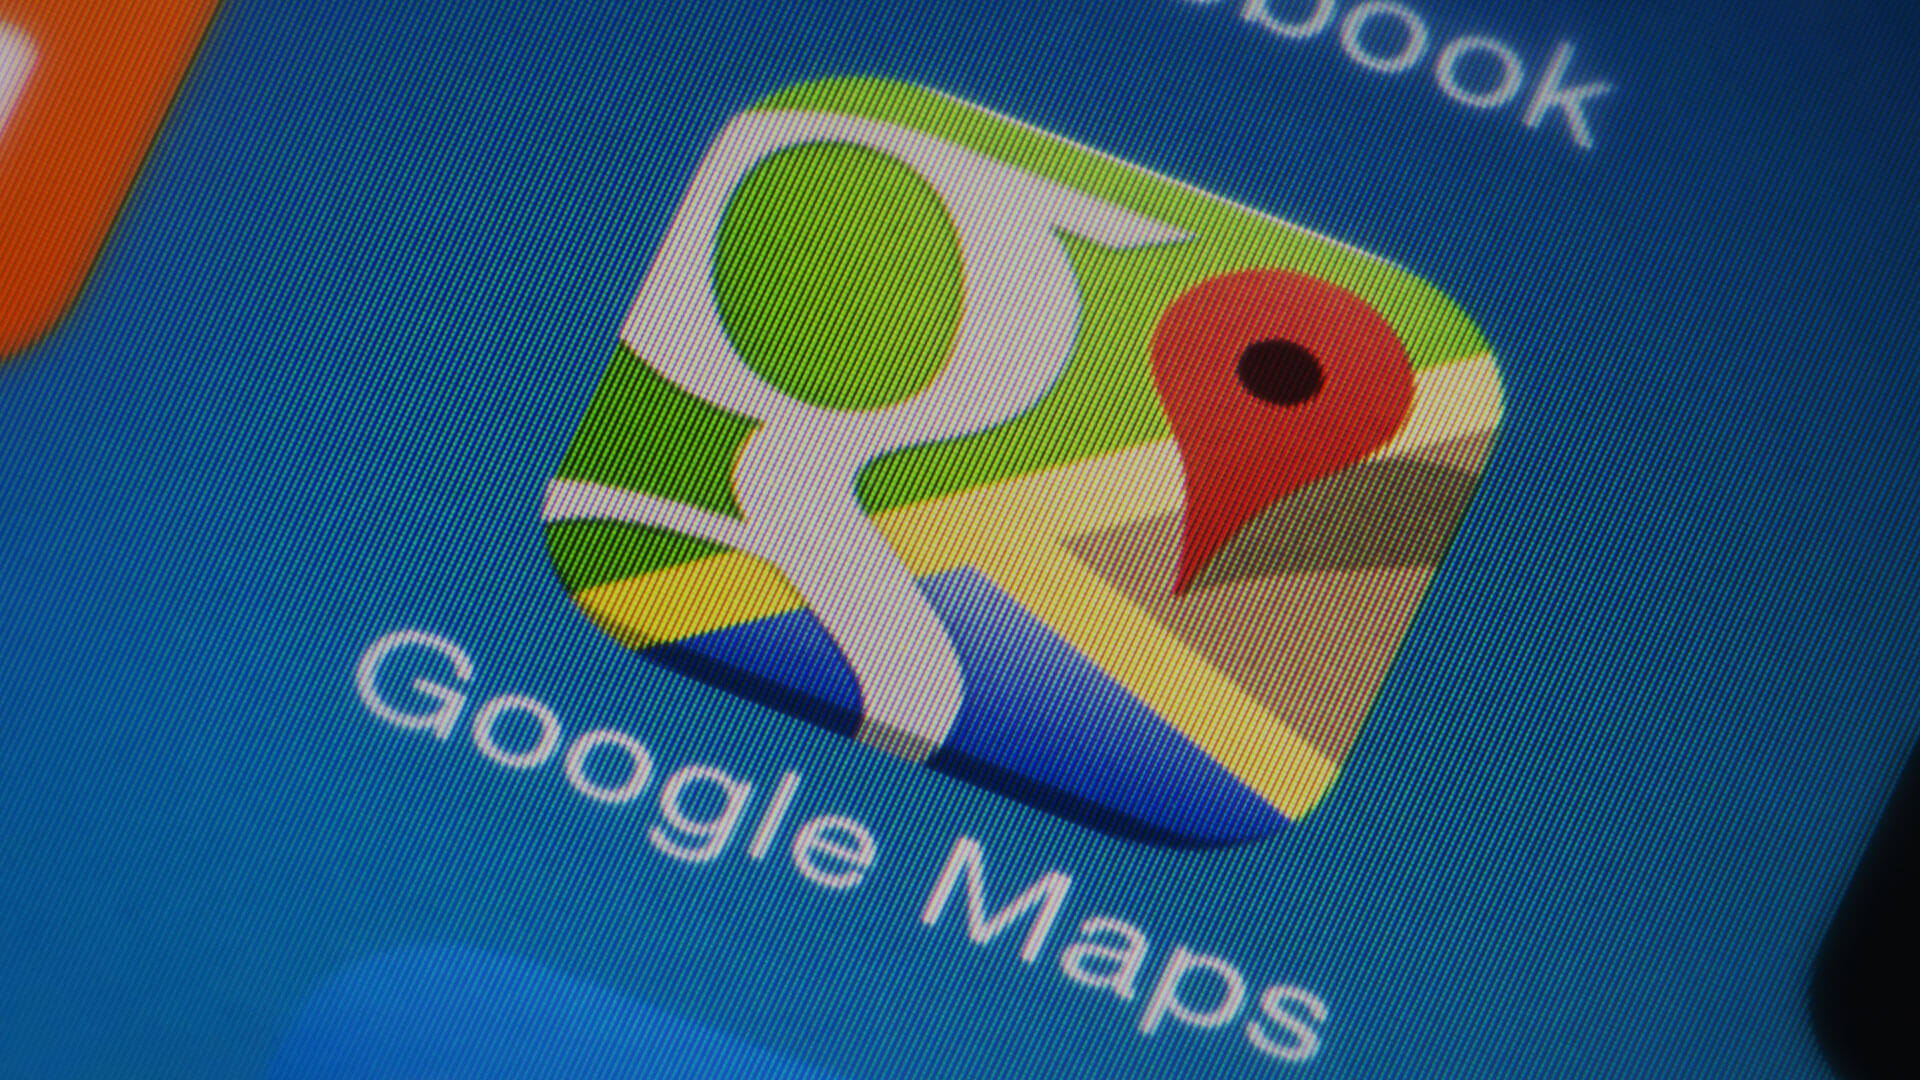 Millones de fichas de Google Maps falsas perjudican a empresas y consumidores reales